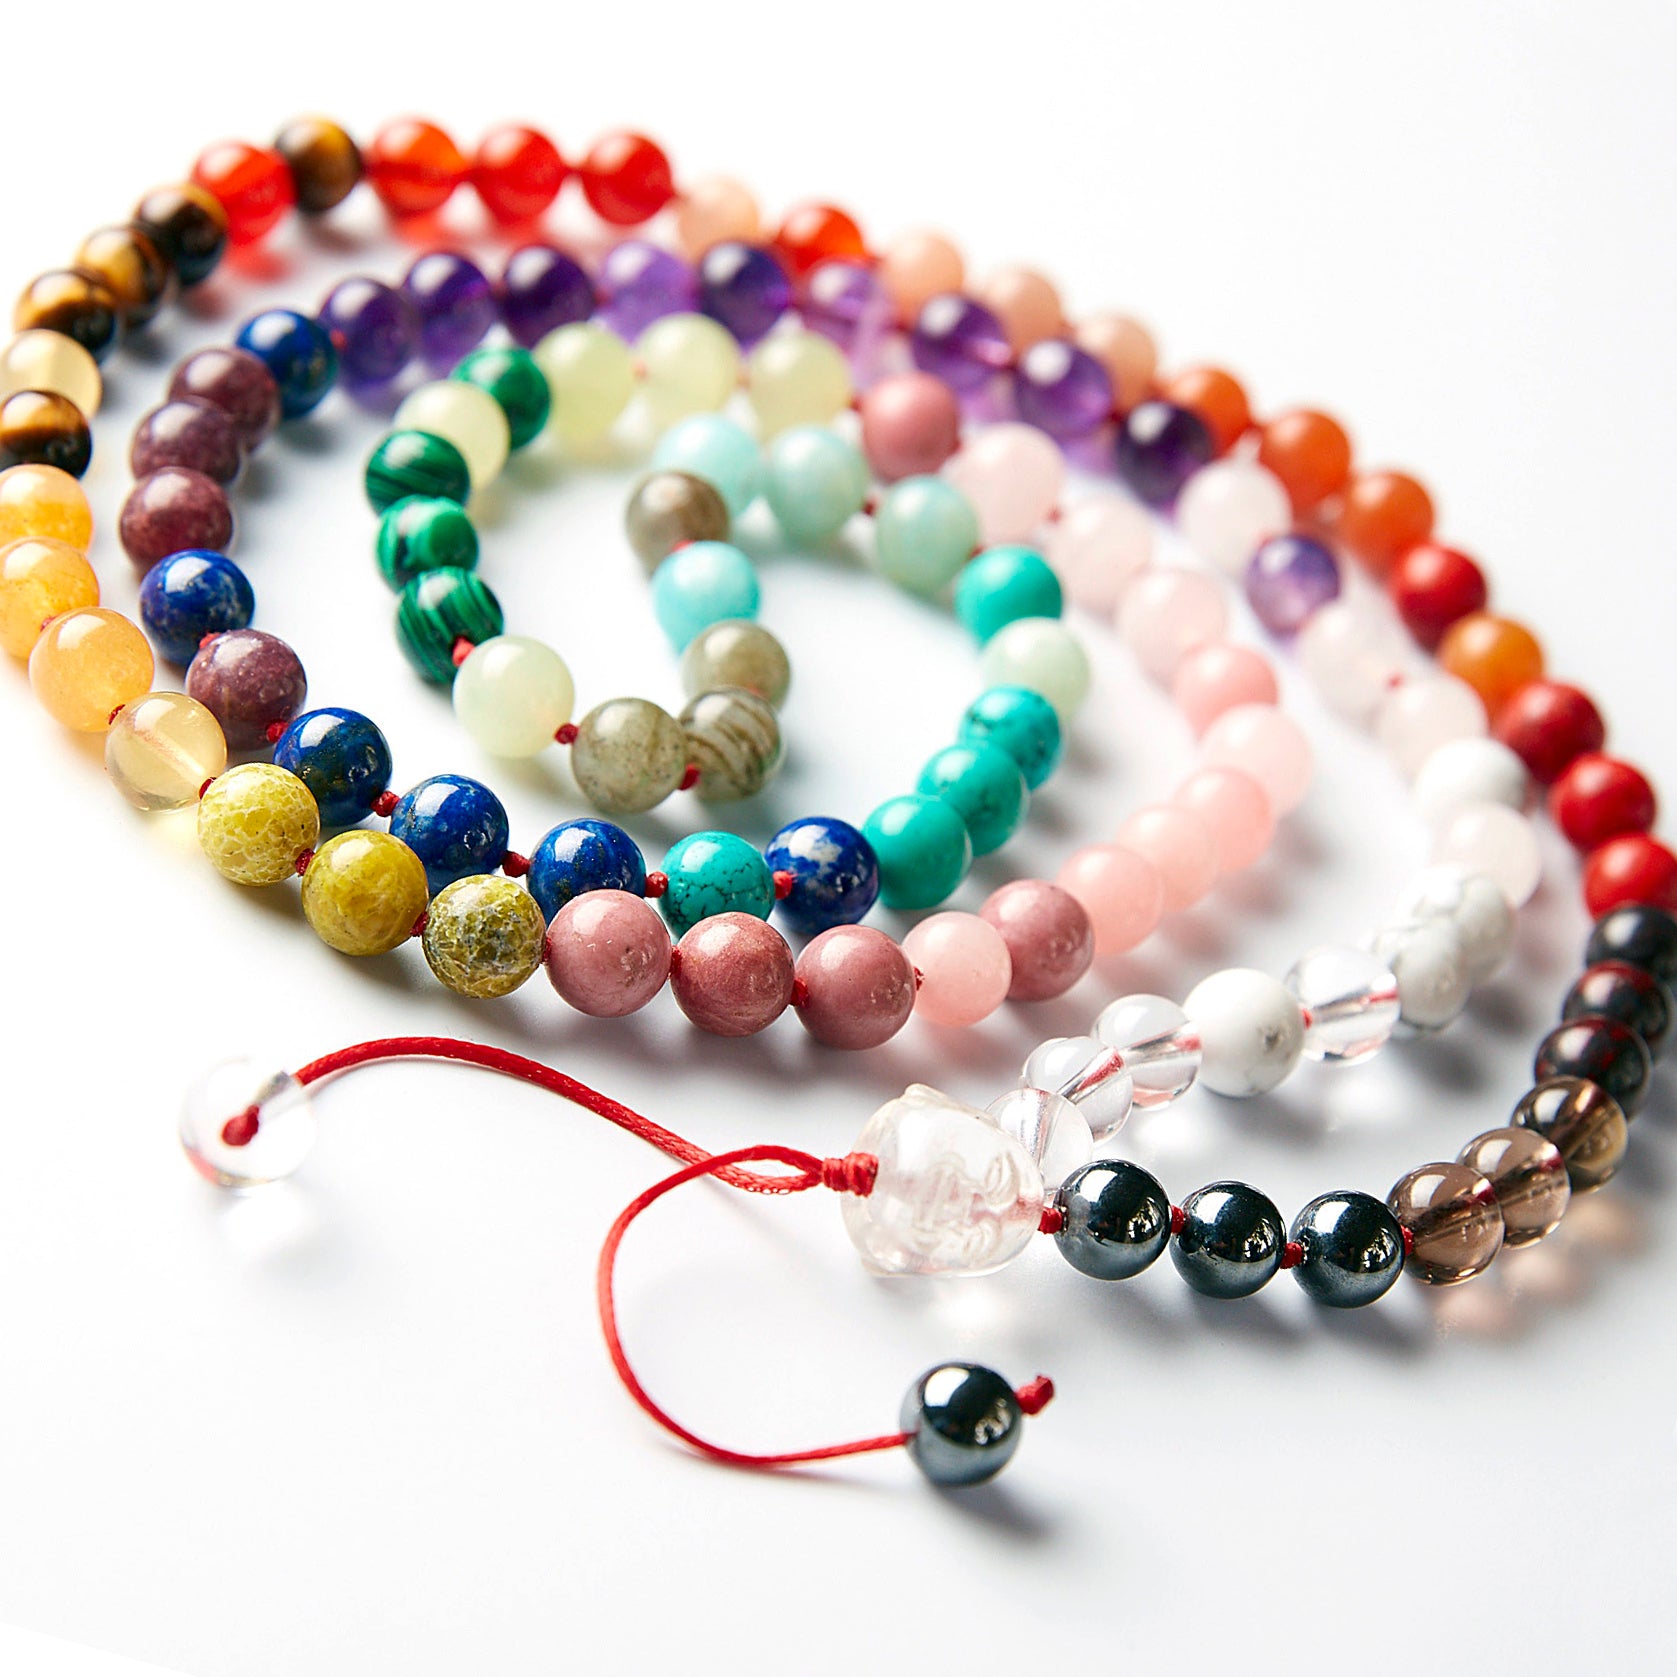 Fossil Beads Hand Knotted Spiritual Mala Beads Jewelry Necklace - Karma,  Nirvana, Meditation, 6MM, Prayer Beads, For Awakening Chakra